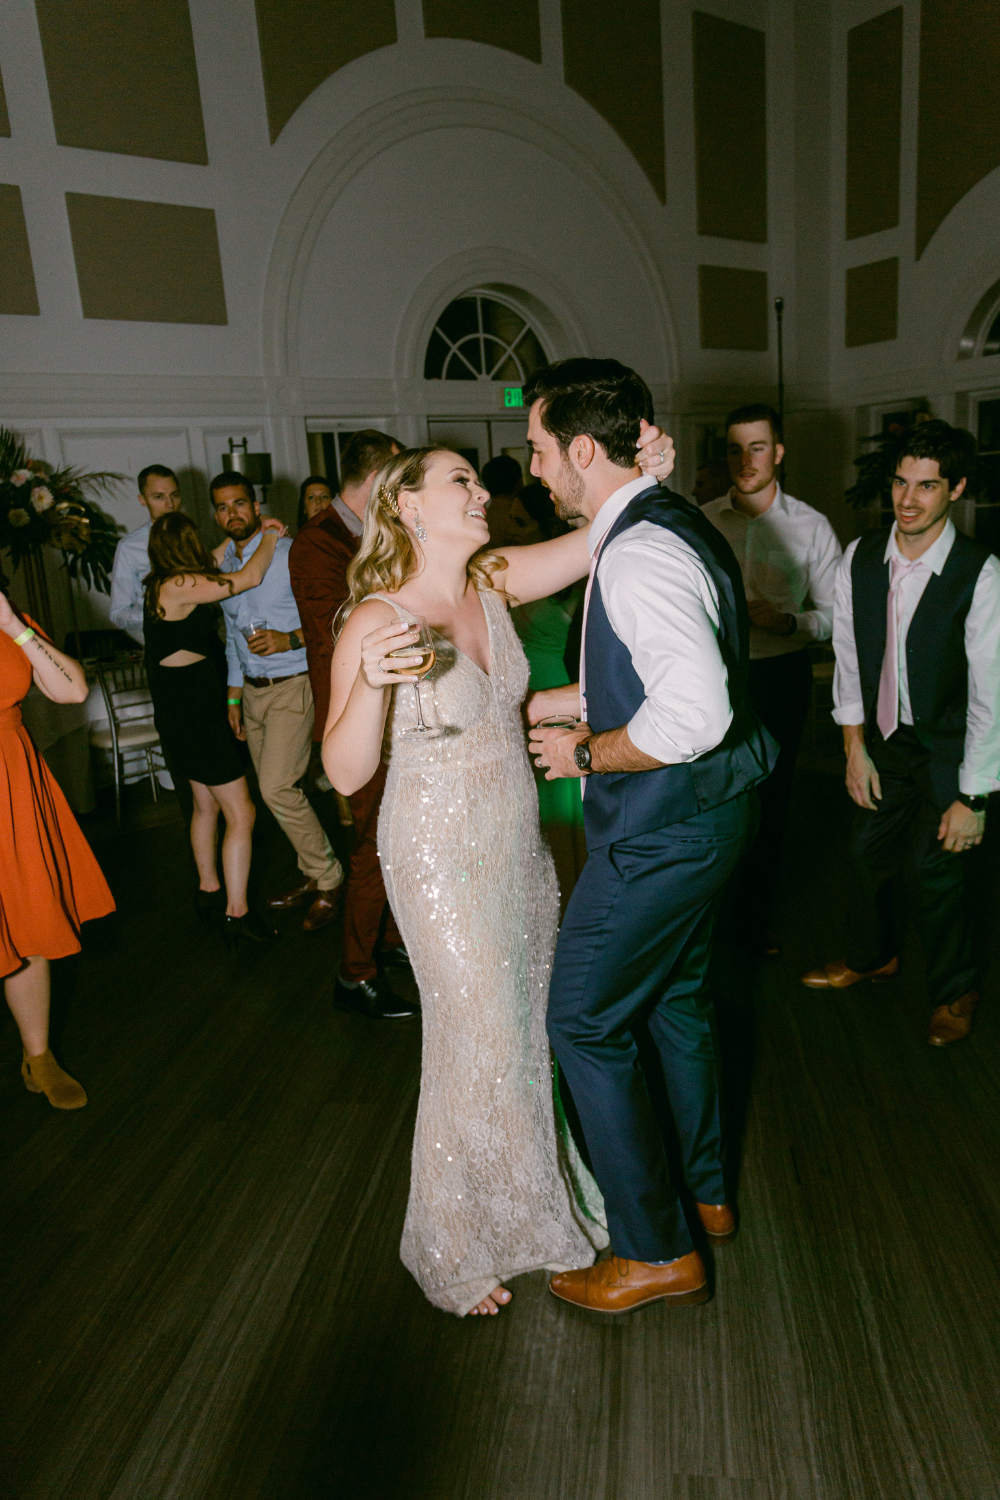 Bride and groom dancing at wedding reception at River Run Country Club